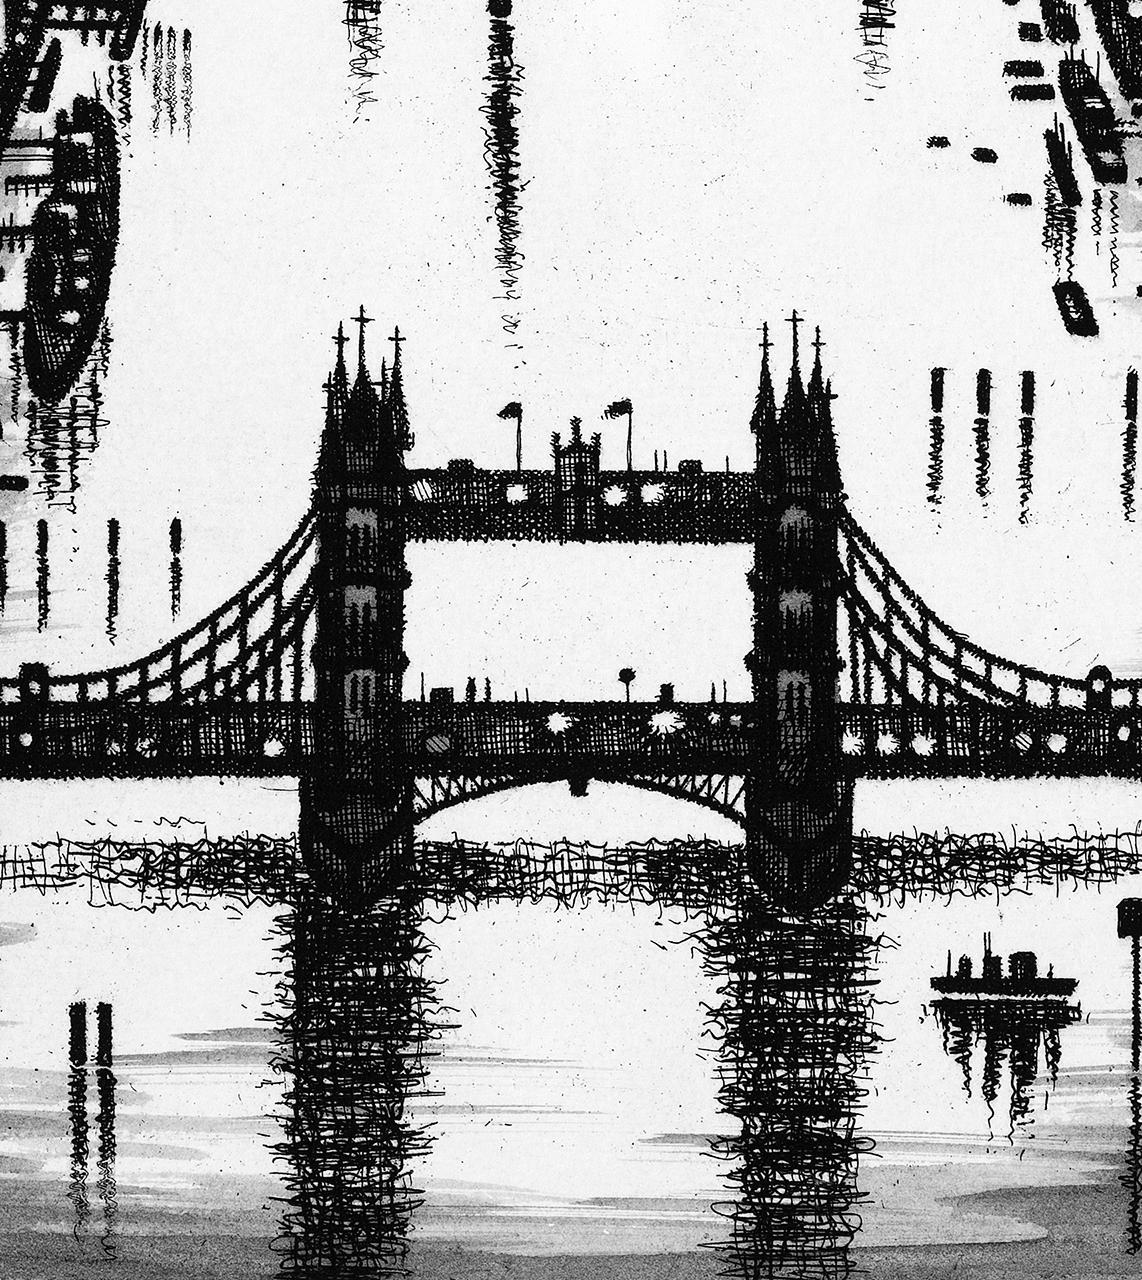 John Duffin, Thames Bridge - Looking West, London Art, Cityscape Art, River Art 2